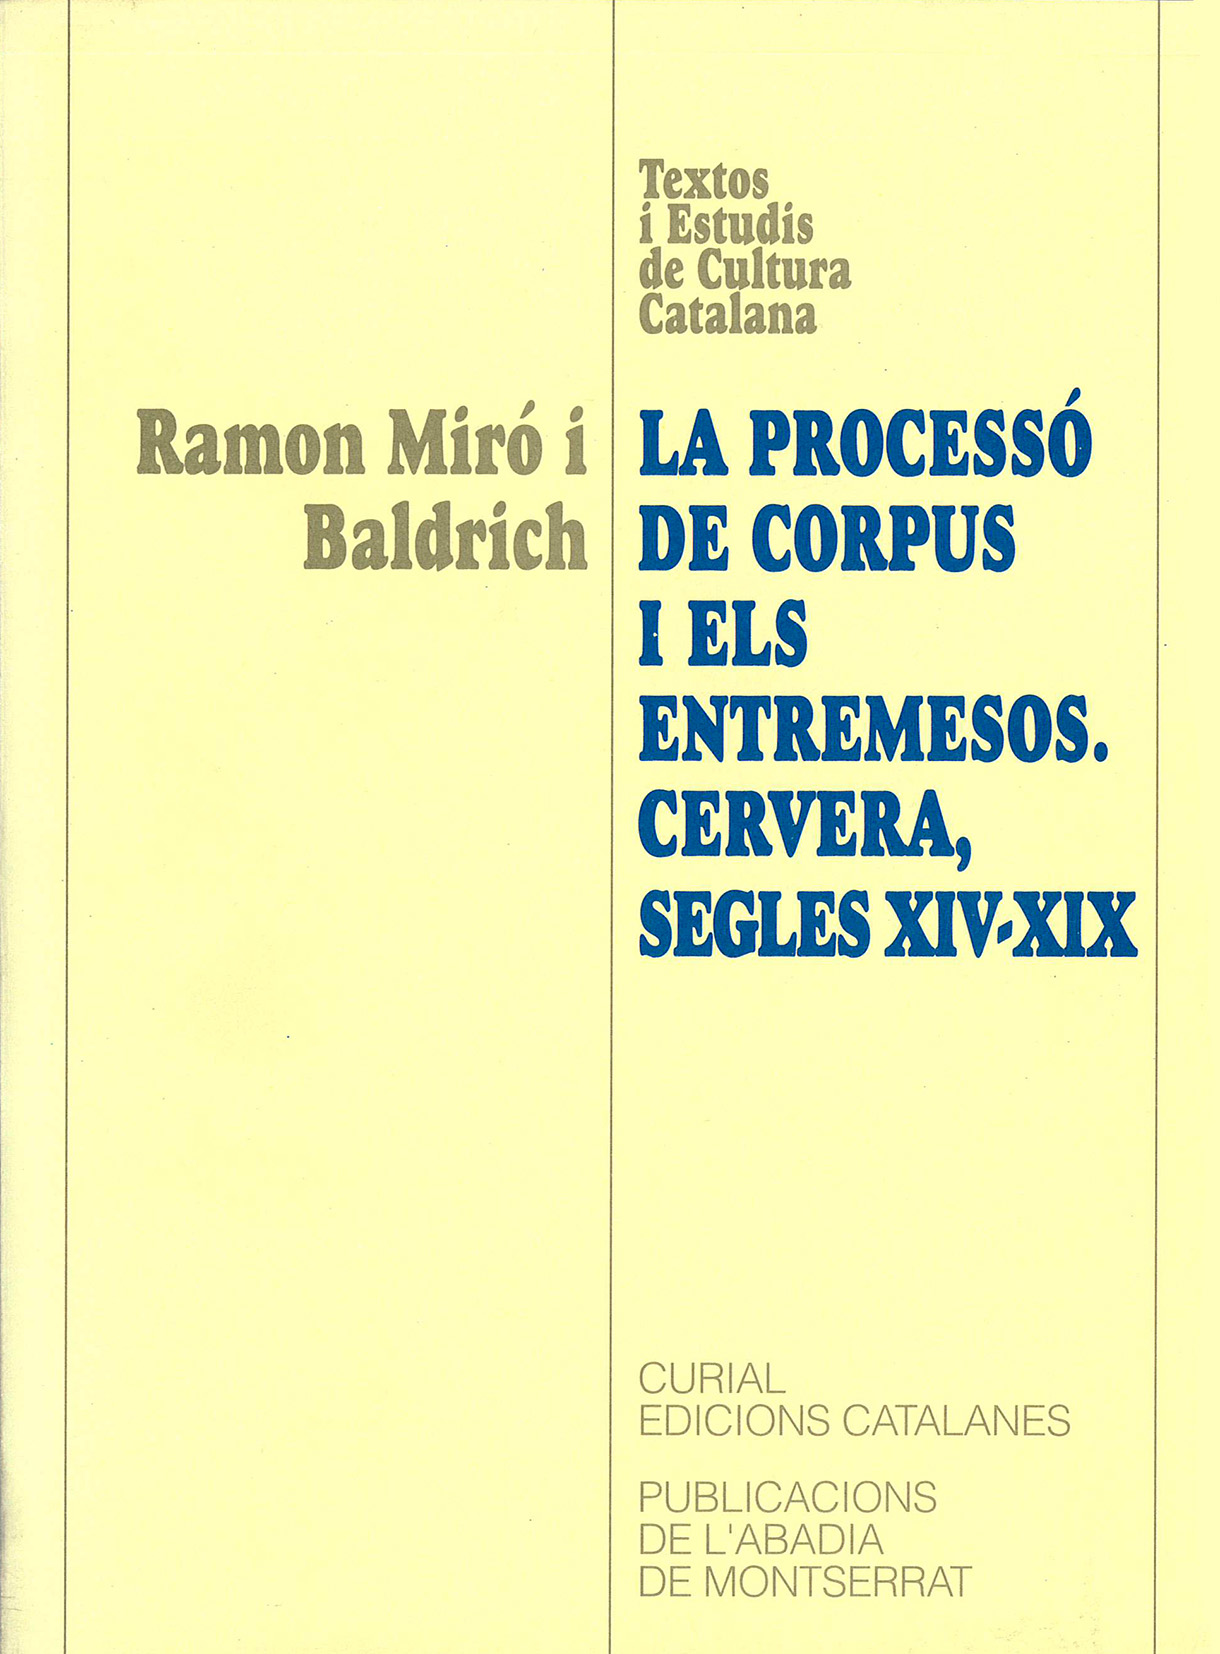 Ramon Miró i Baldrich